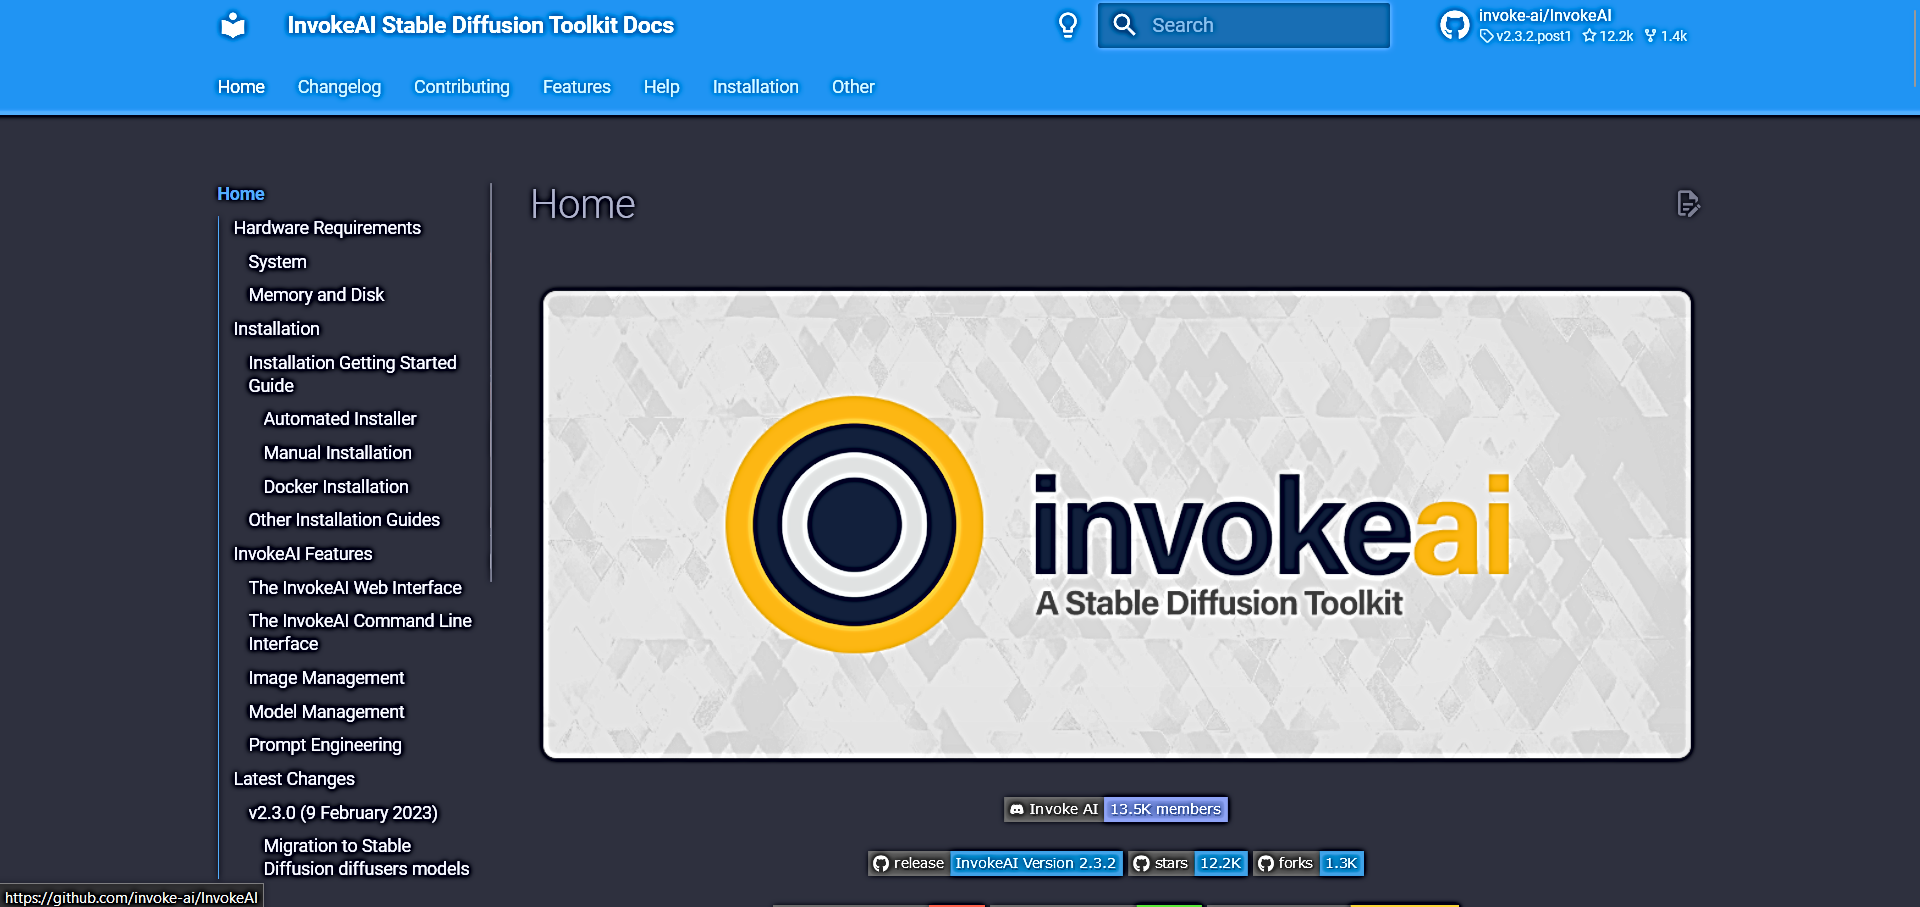 InvokeAI featured